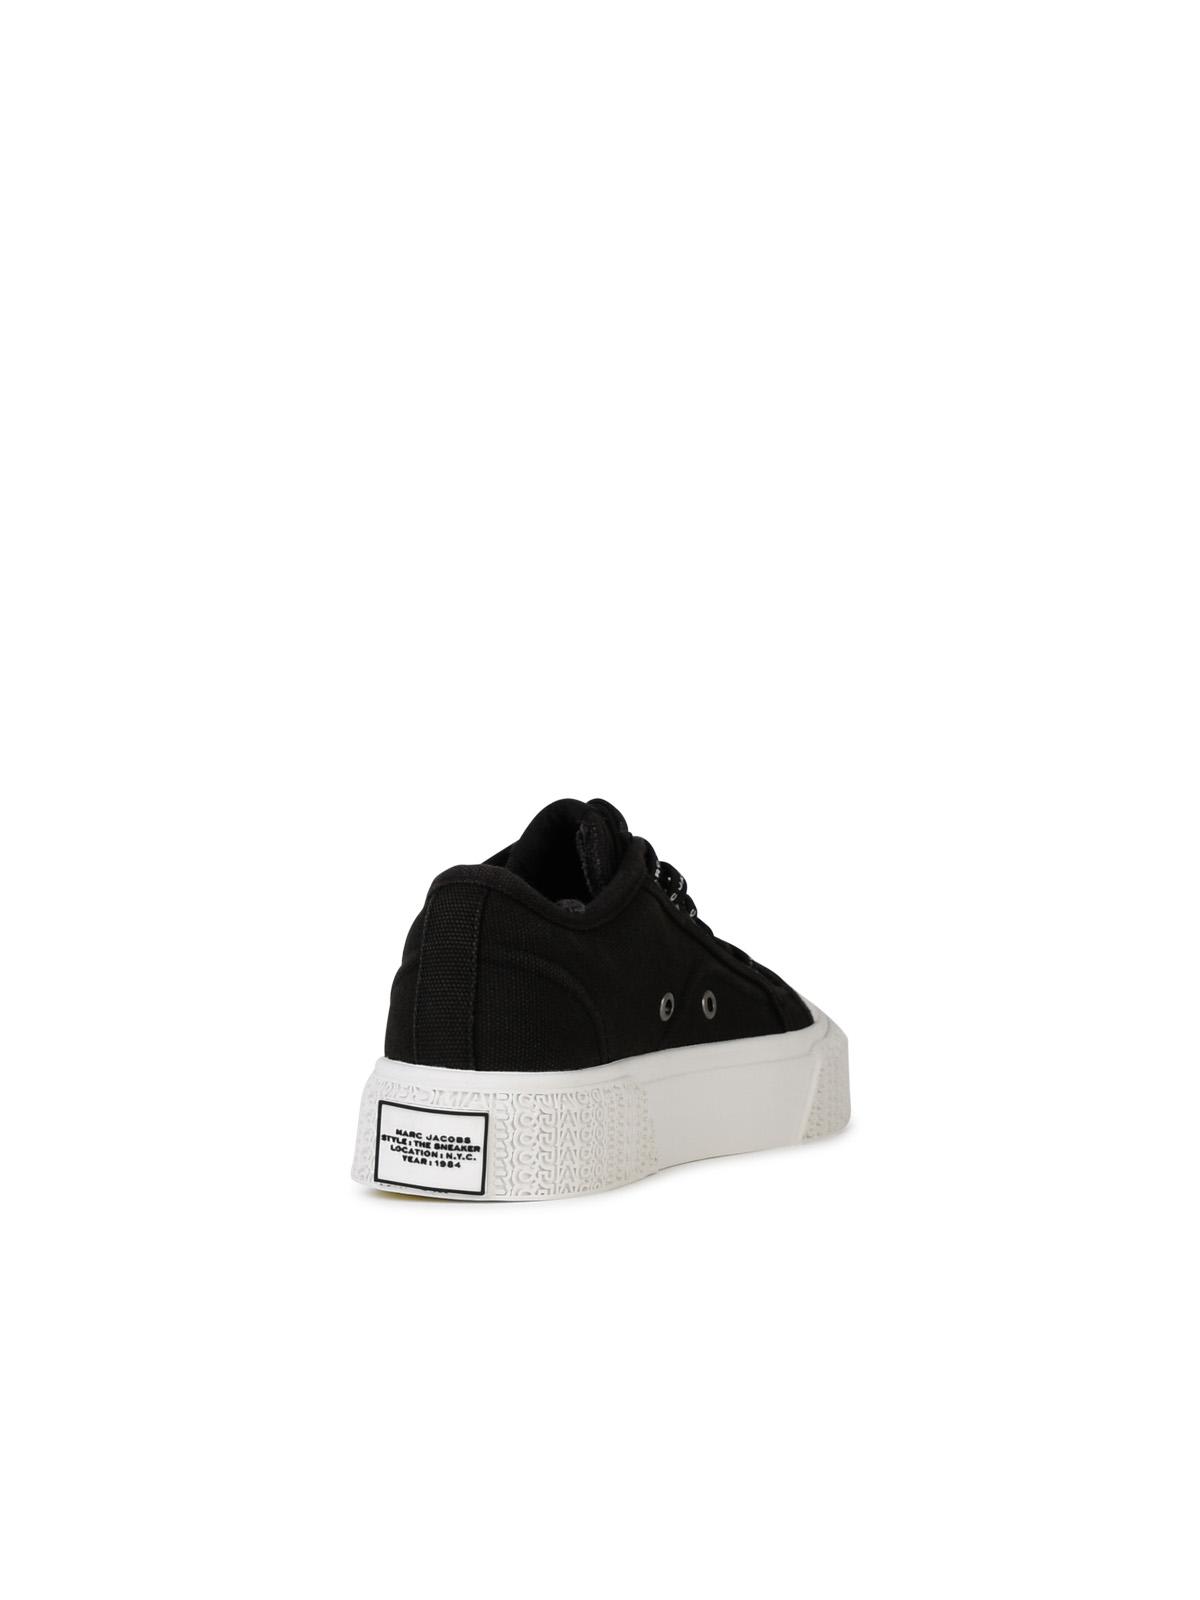 Shop Marc Jacobs Black Tela Sneakers